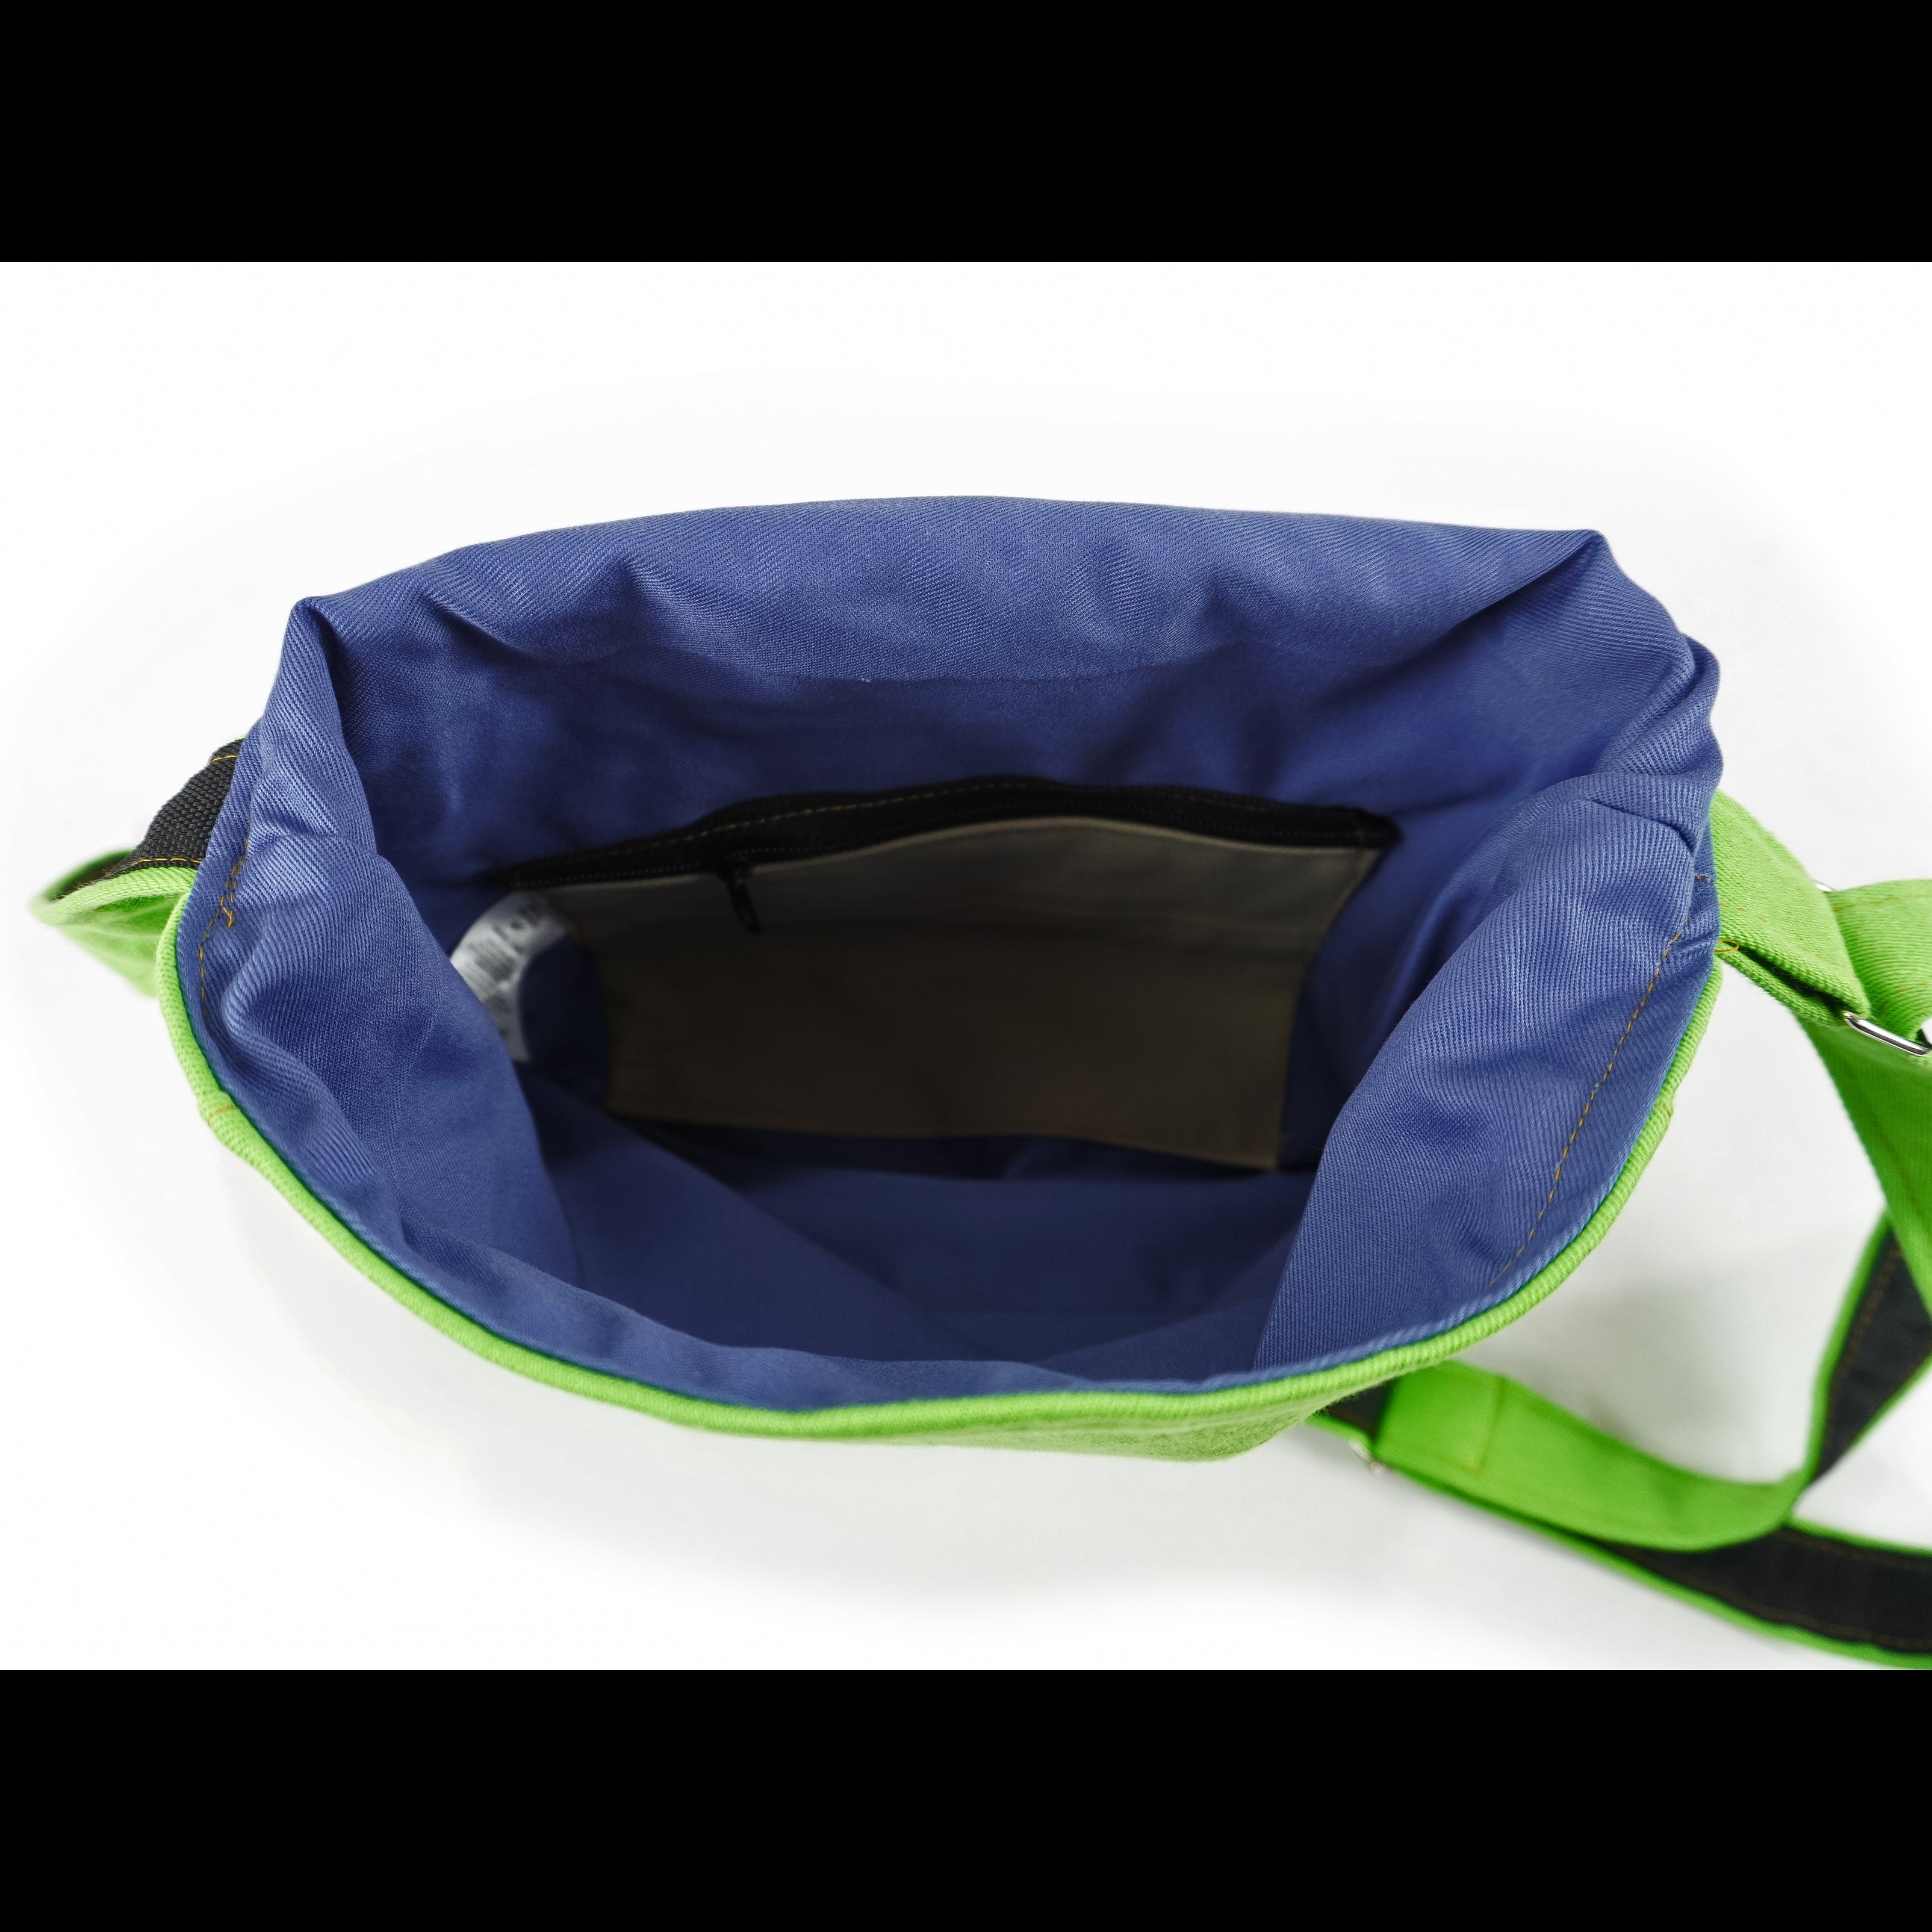 Reworked Nike Tote Bag